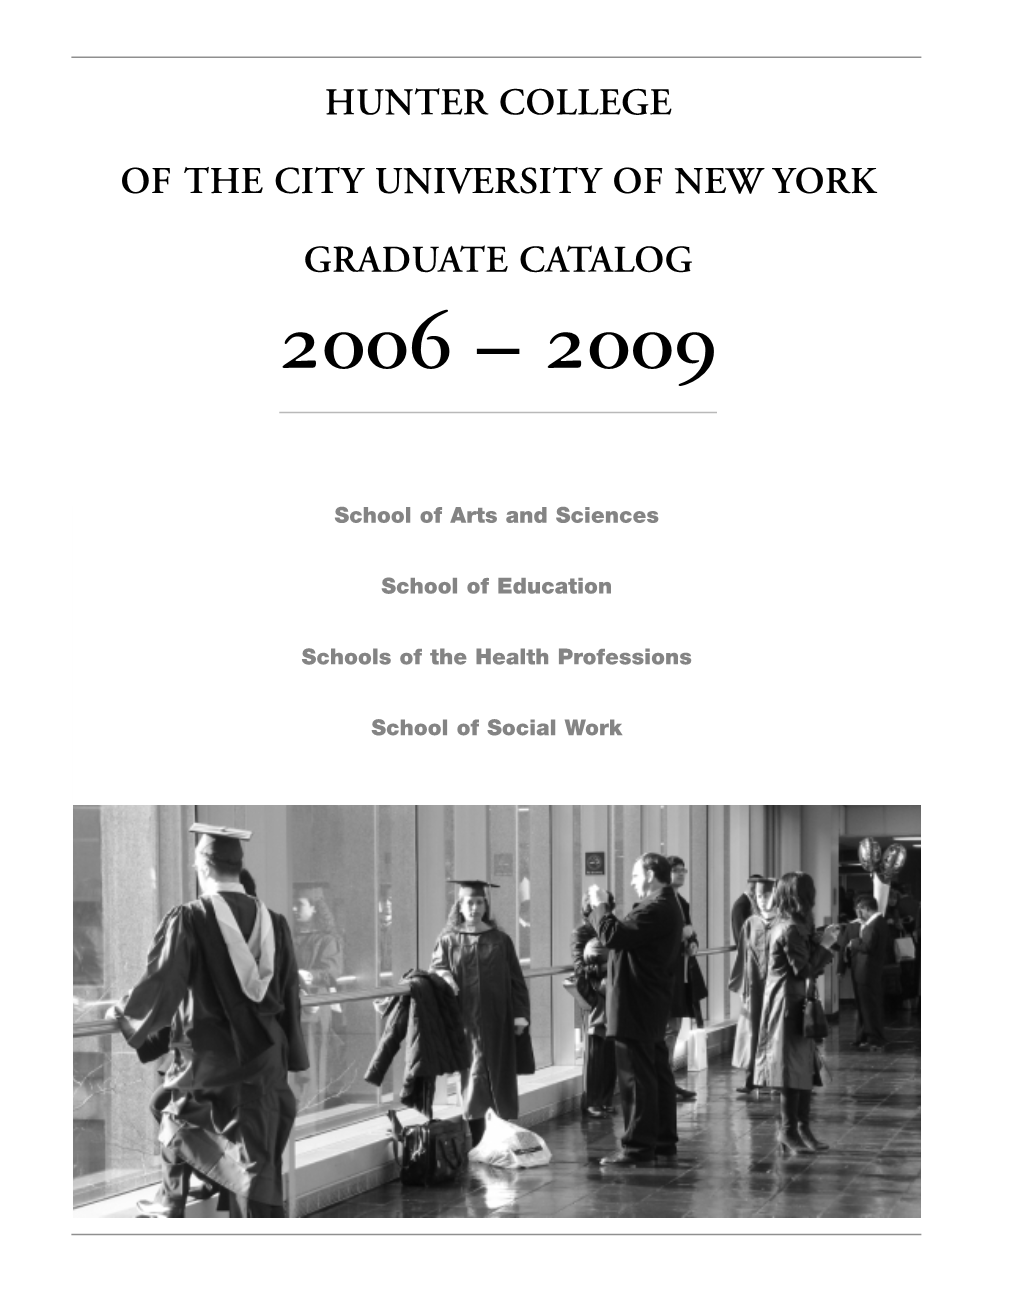 Hunter College of the City University of New York Graduate Catalog